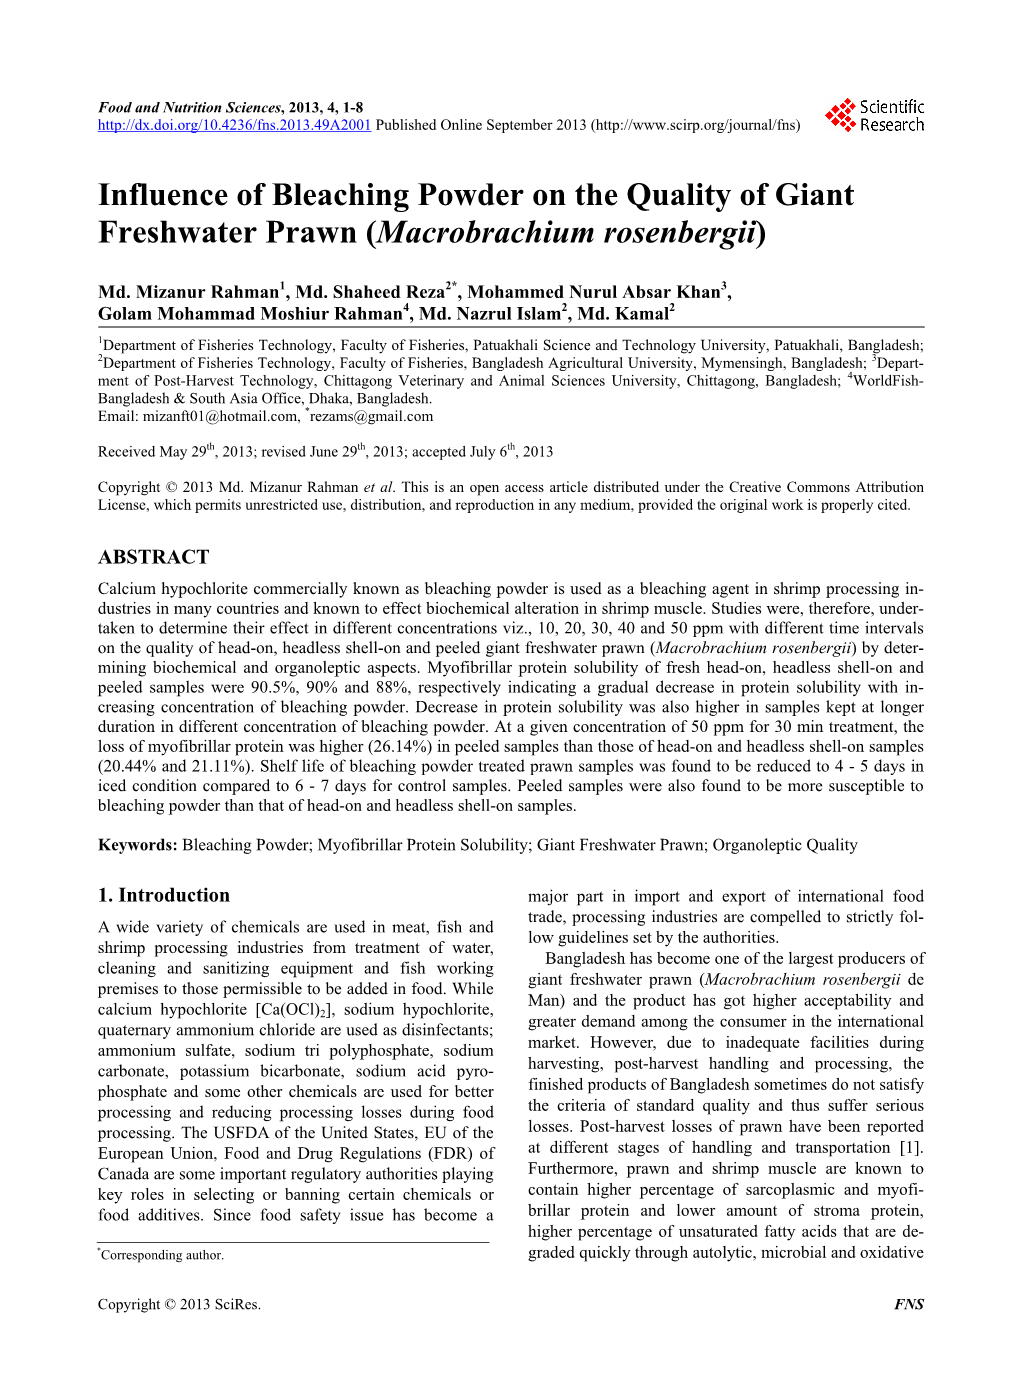 Influence of Bleaching Powder on the Quality of Giant Freshwater Prawn (Macrobrachium Rosenbergii)